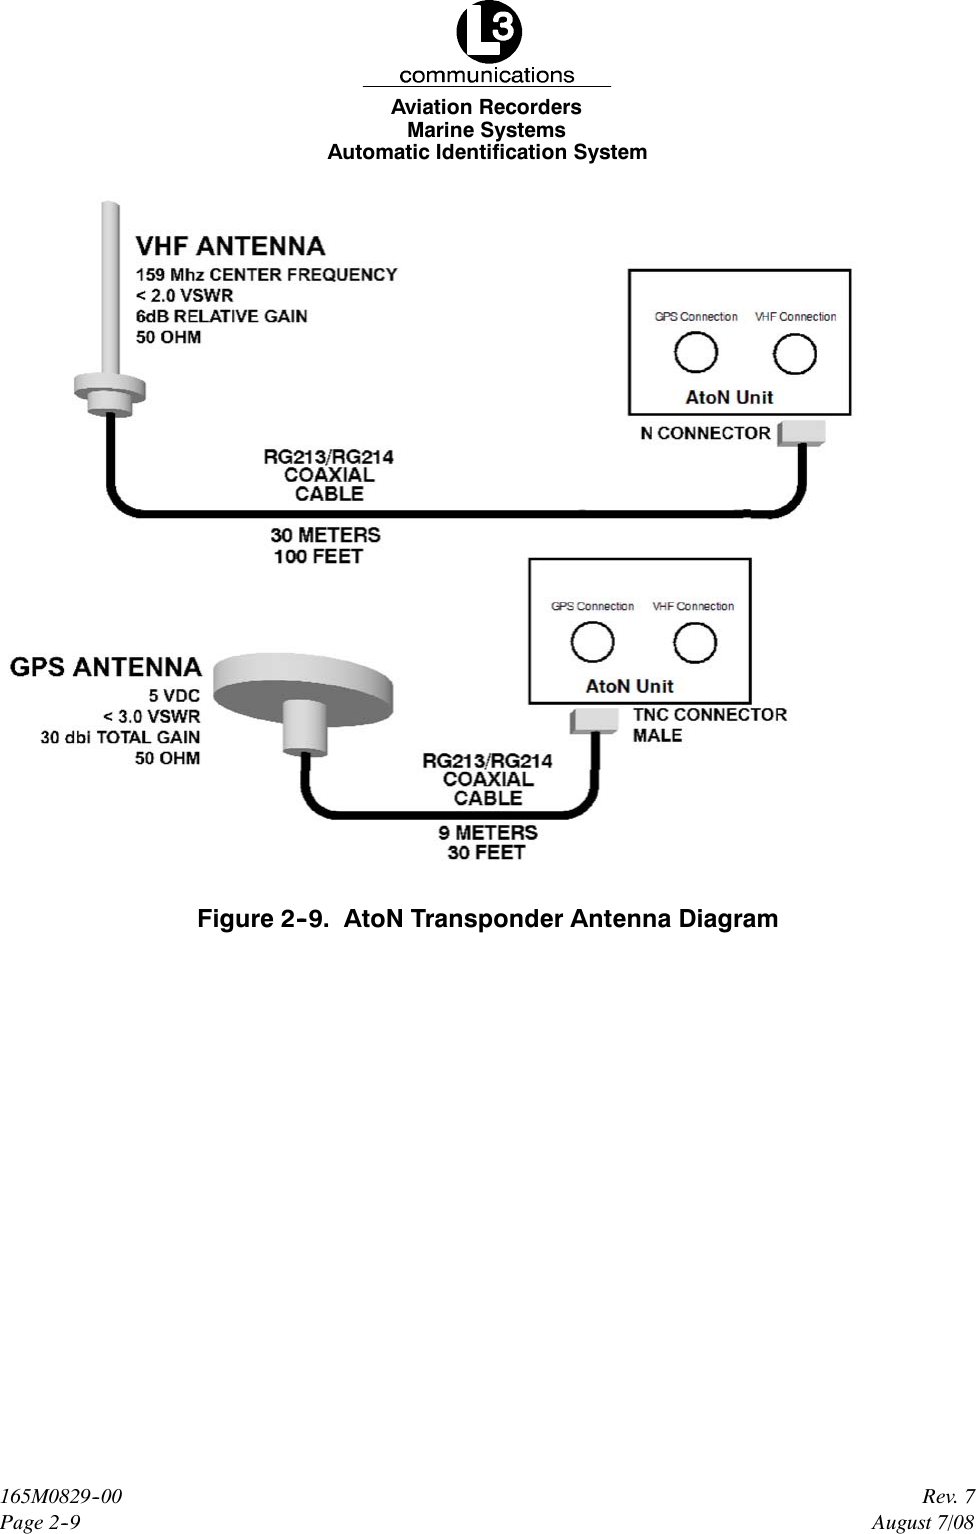 Marine SystemsAviation RecordersAutomatic Identification SystemPage 2--9Rev. 7165M0829--00August 7/08Figure 2--9. AtoN Transponder Antenna Diagram